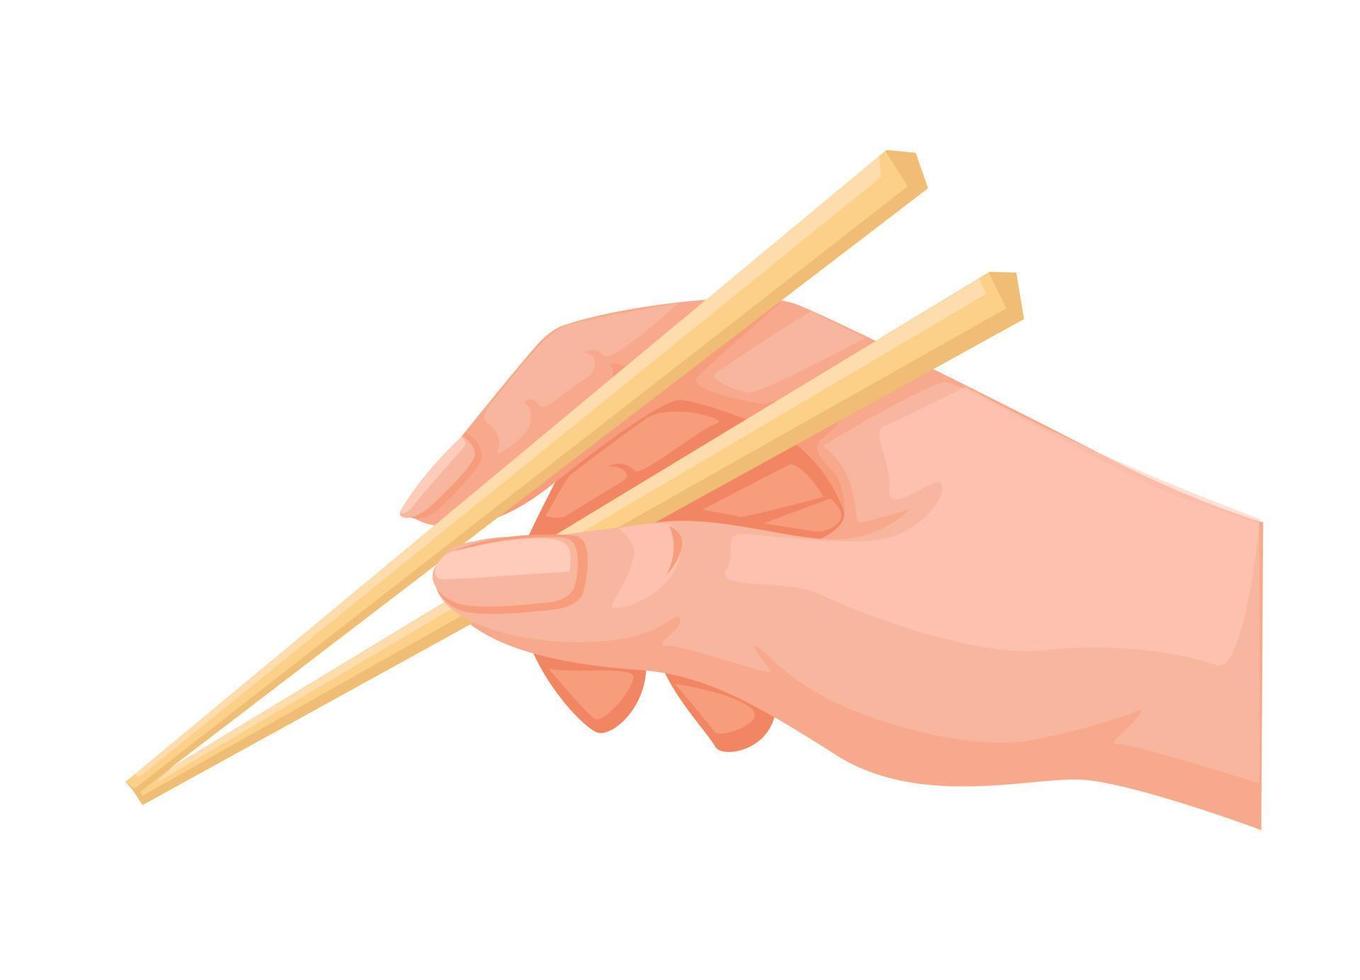 Hand hold chopstick asian kitchen and eating utensils symbol cartoon illustration vector